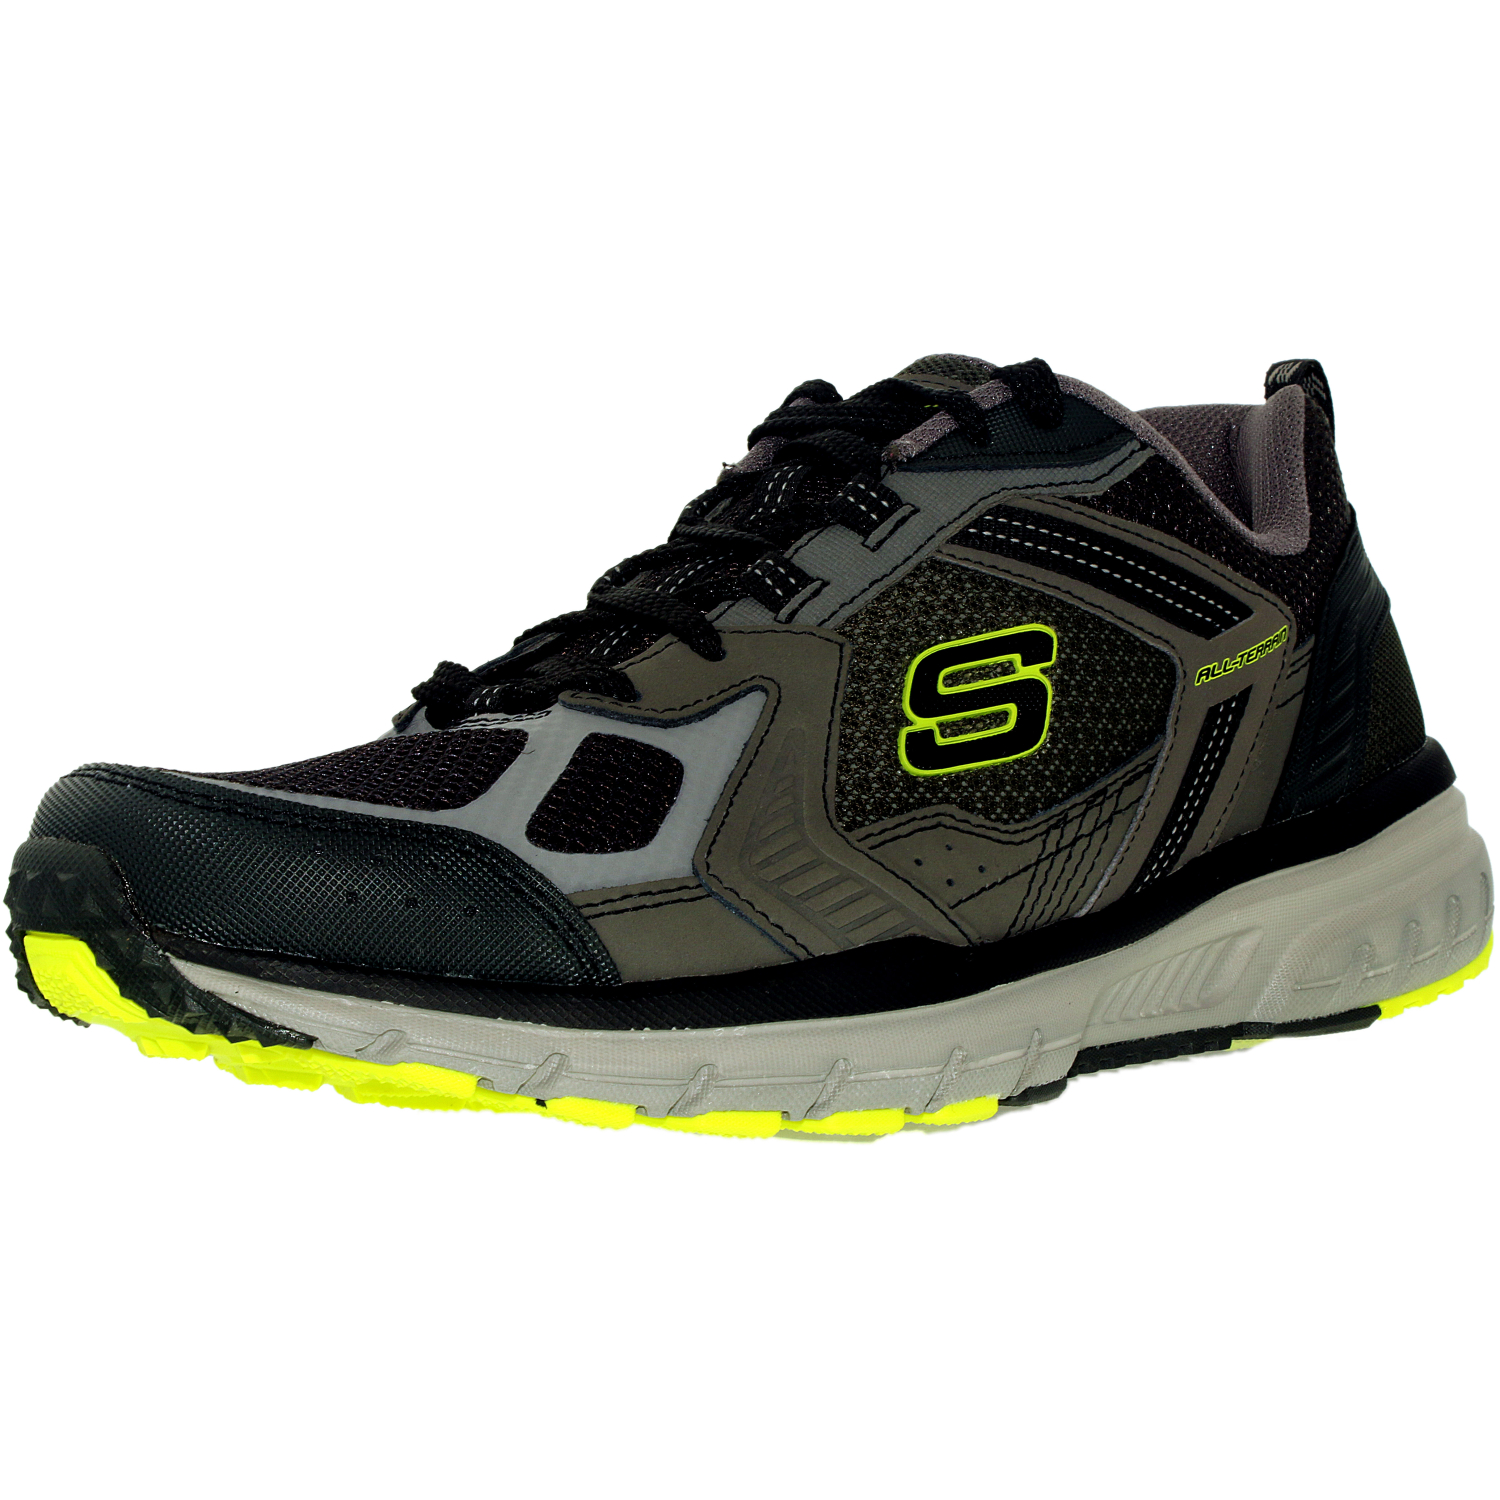 Color:Charcoal/Lime:Skechers Men's Geo Trek Pro Force Ankle-High Tennis Shoe